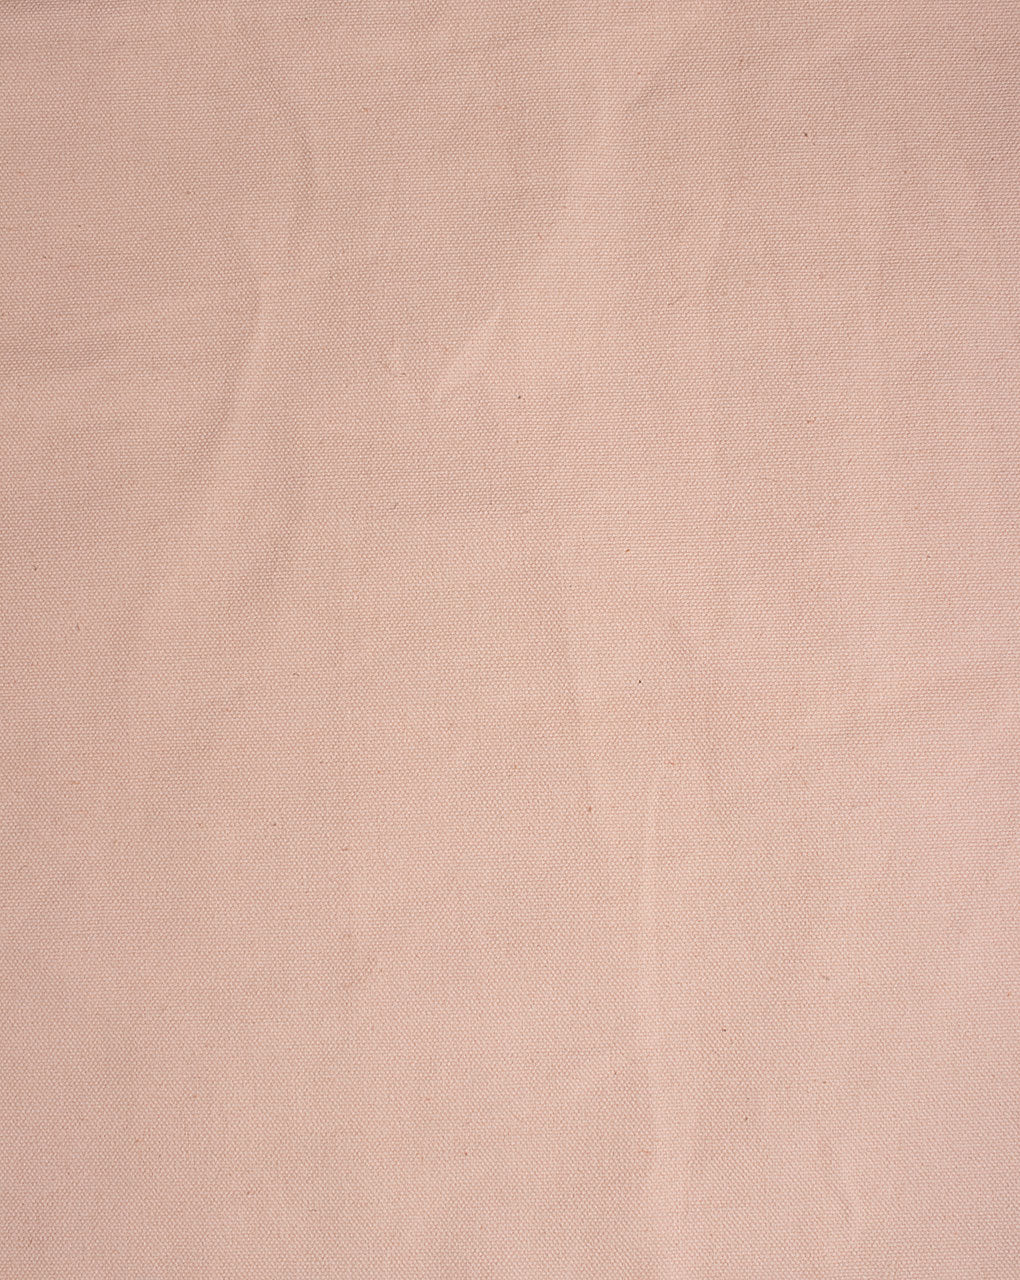 Salmon Plain Cotton Canvas Fabric ( Width 62 Inch )